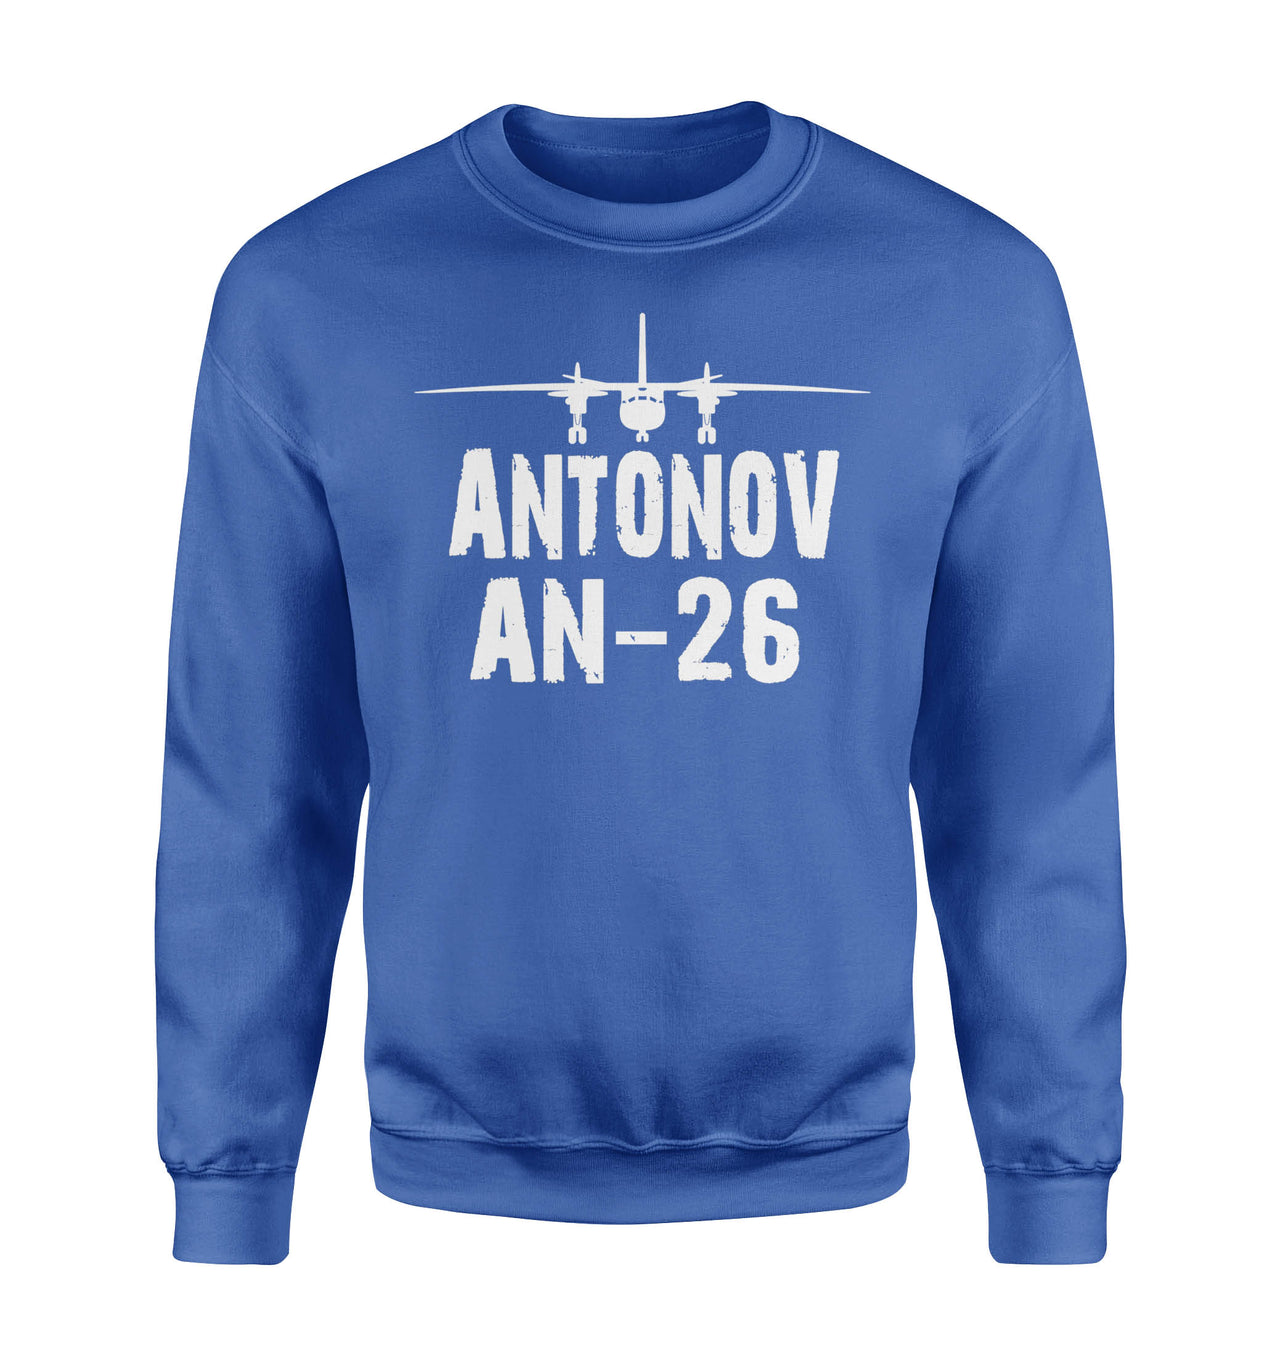 Antonov AN-26 & Plane Designed Sweatshirts